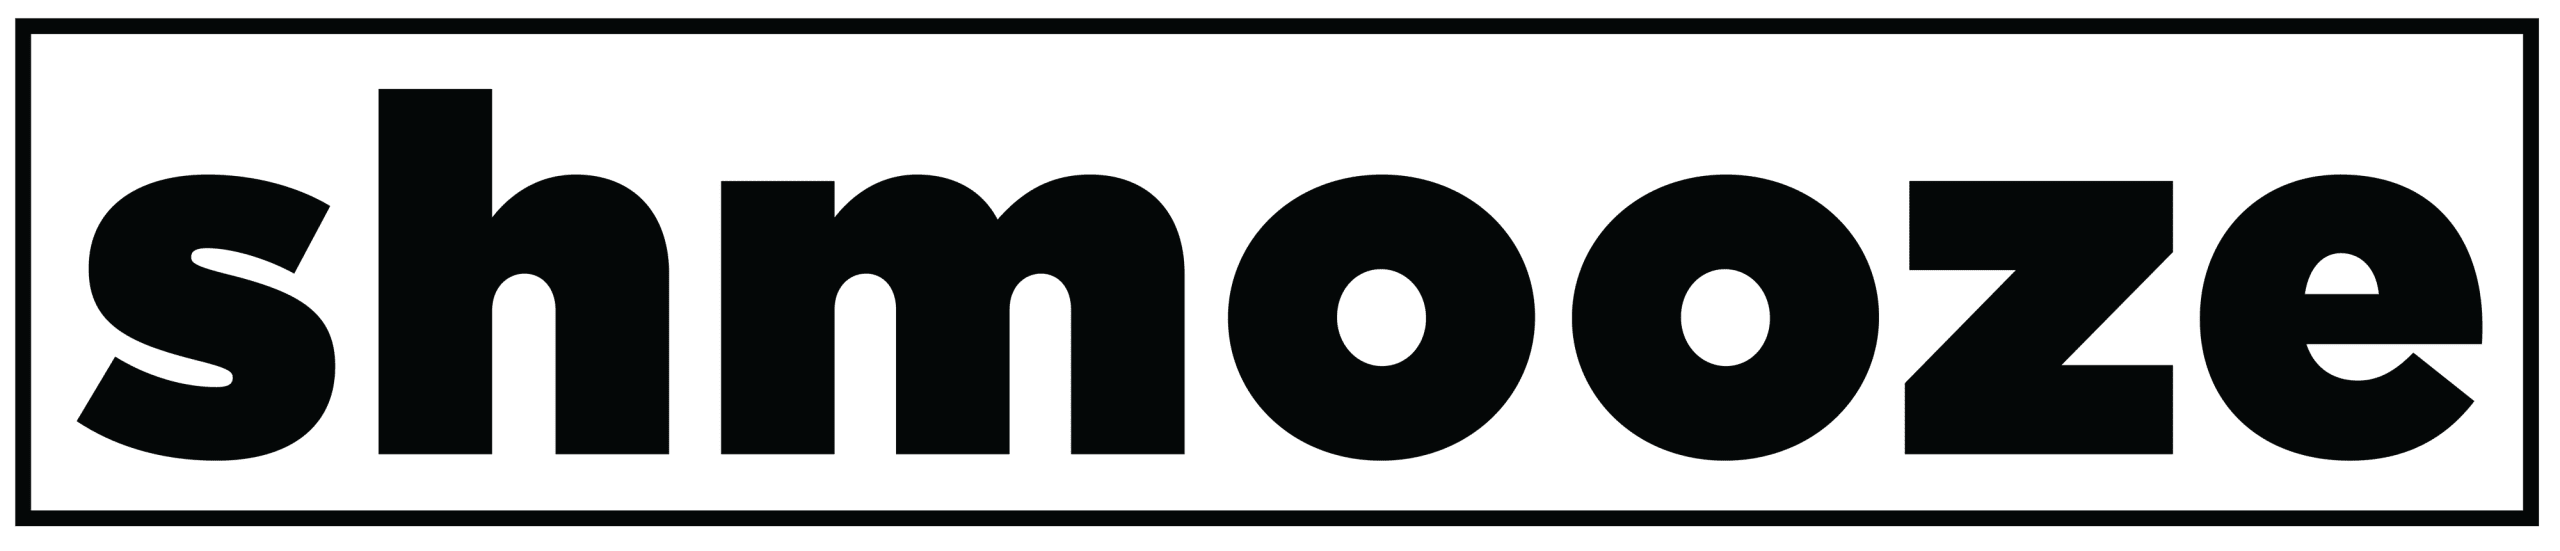 shmooze-logo-high-res-no-tagline